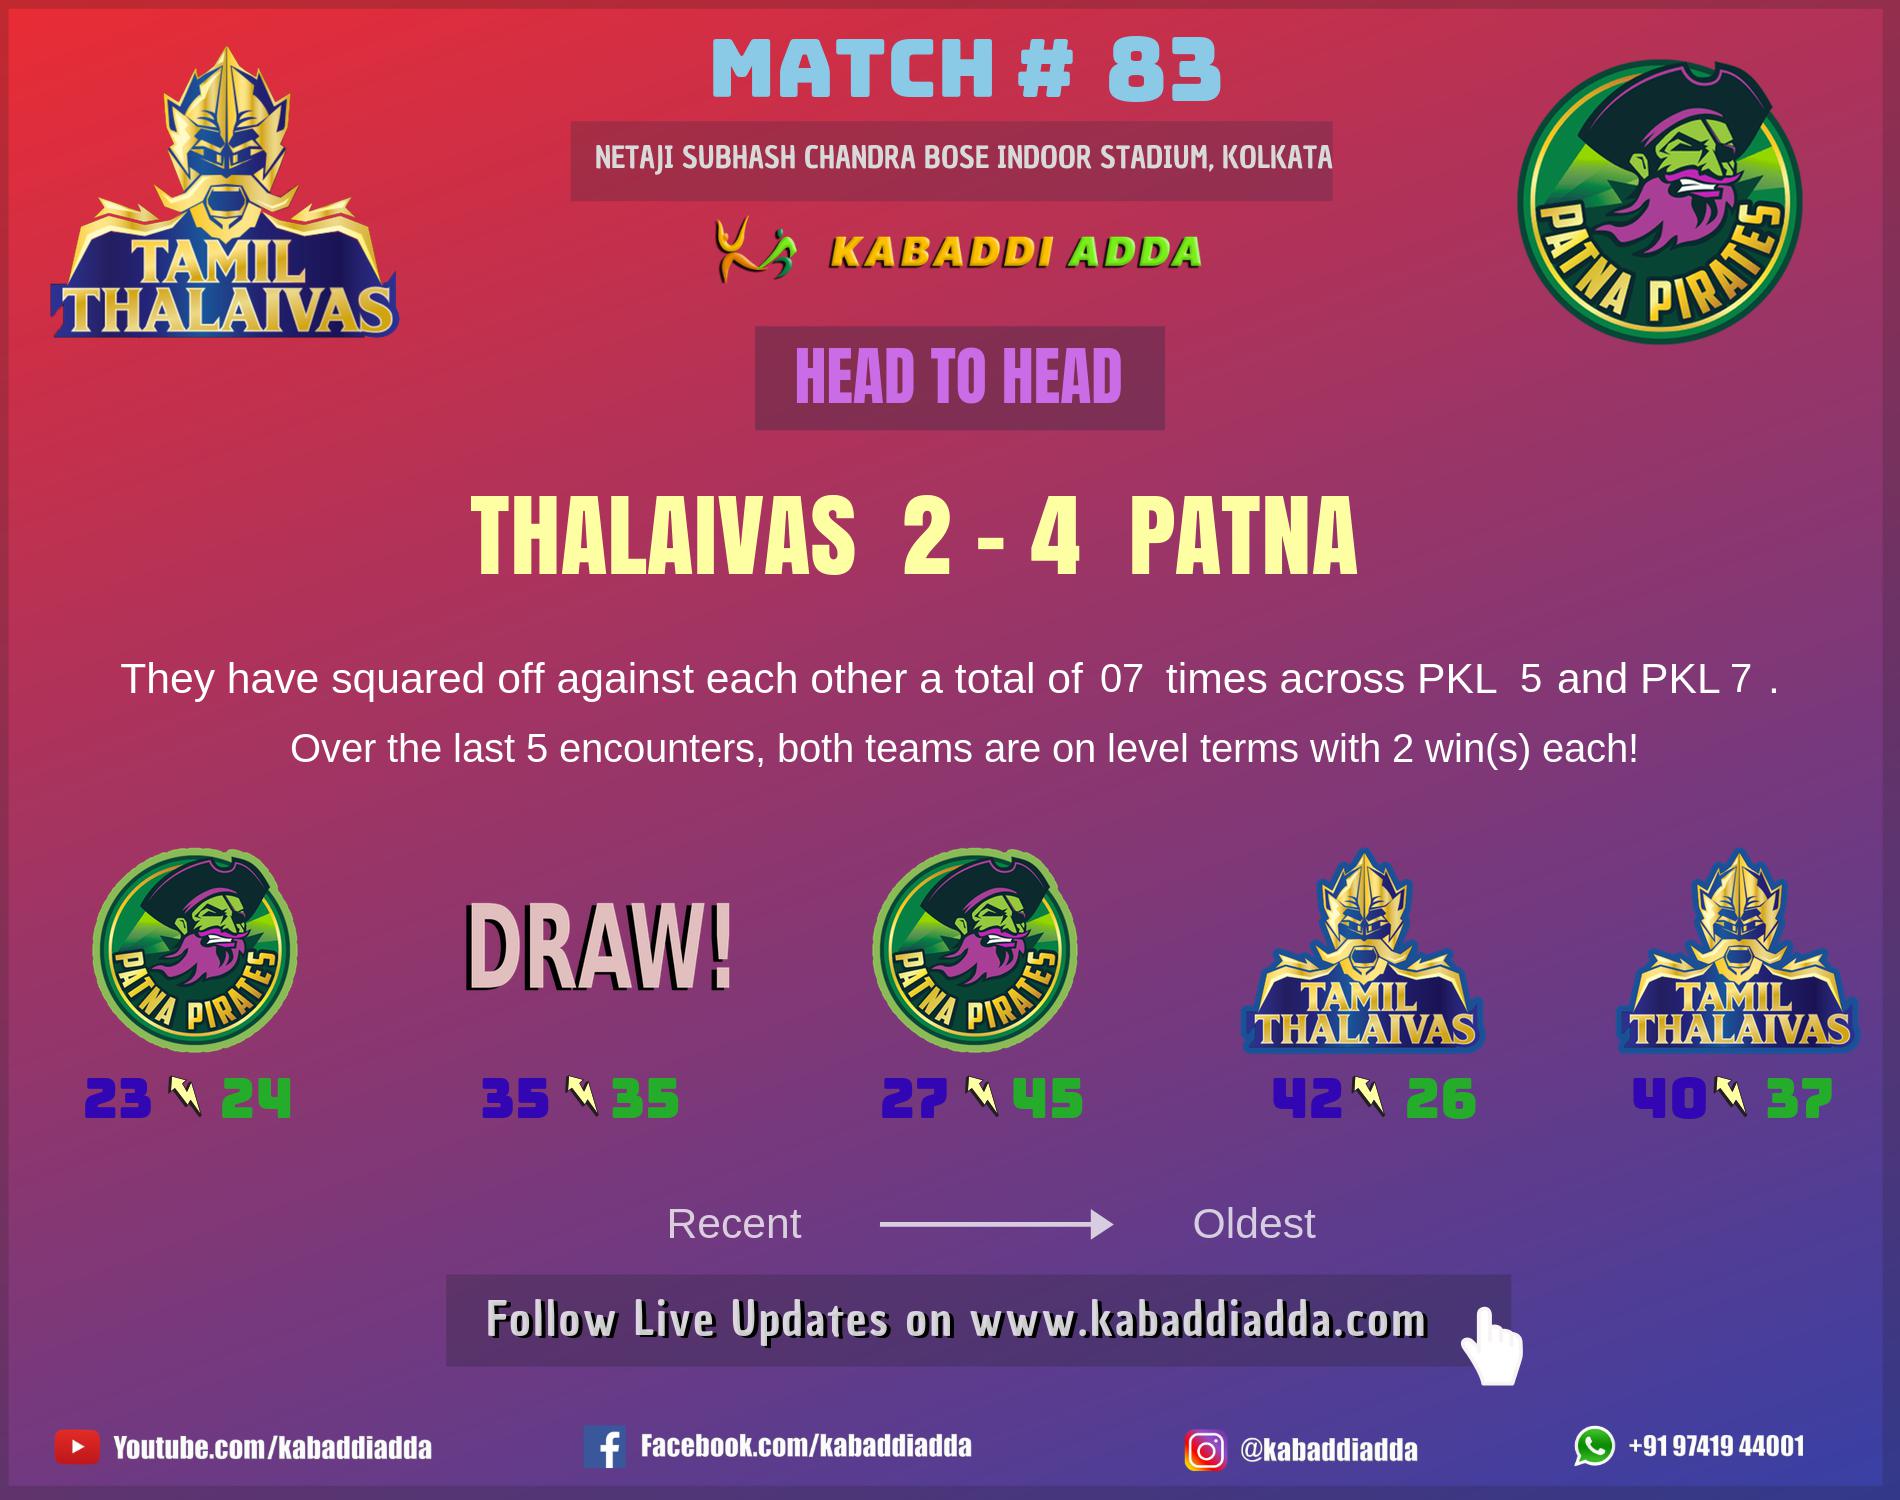 Tamil Thalaivas is playing against Patna Pirates